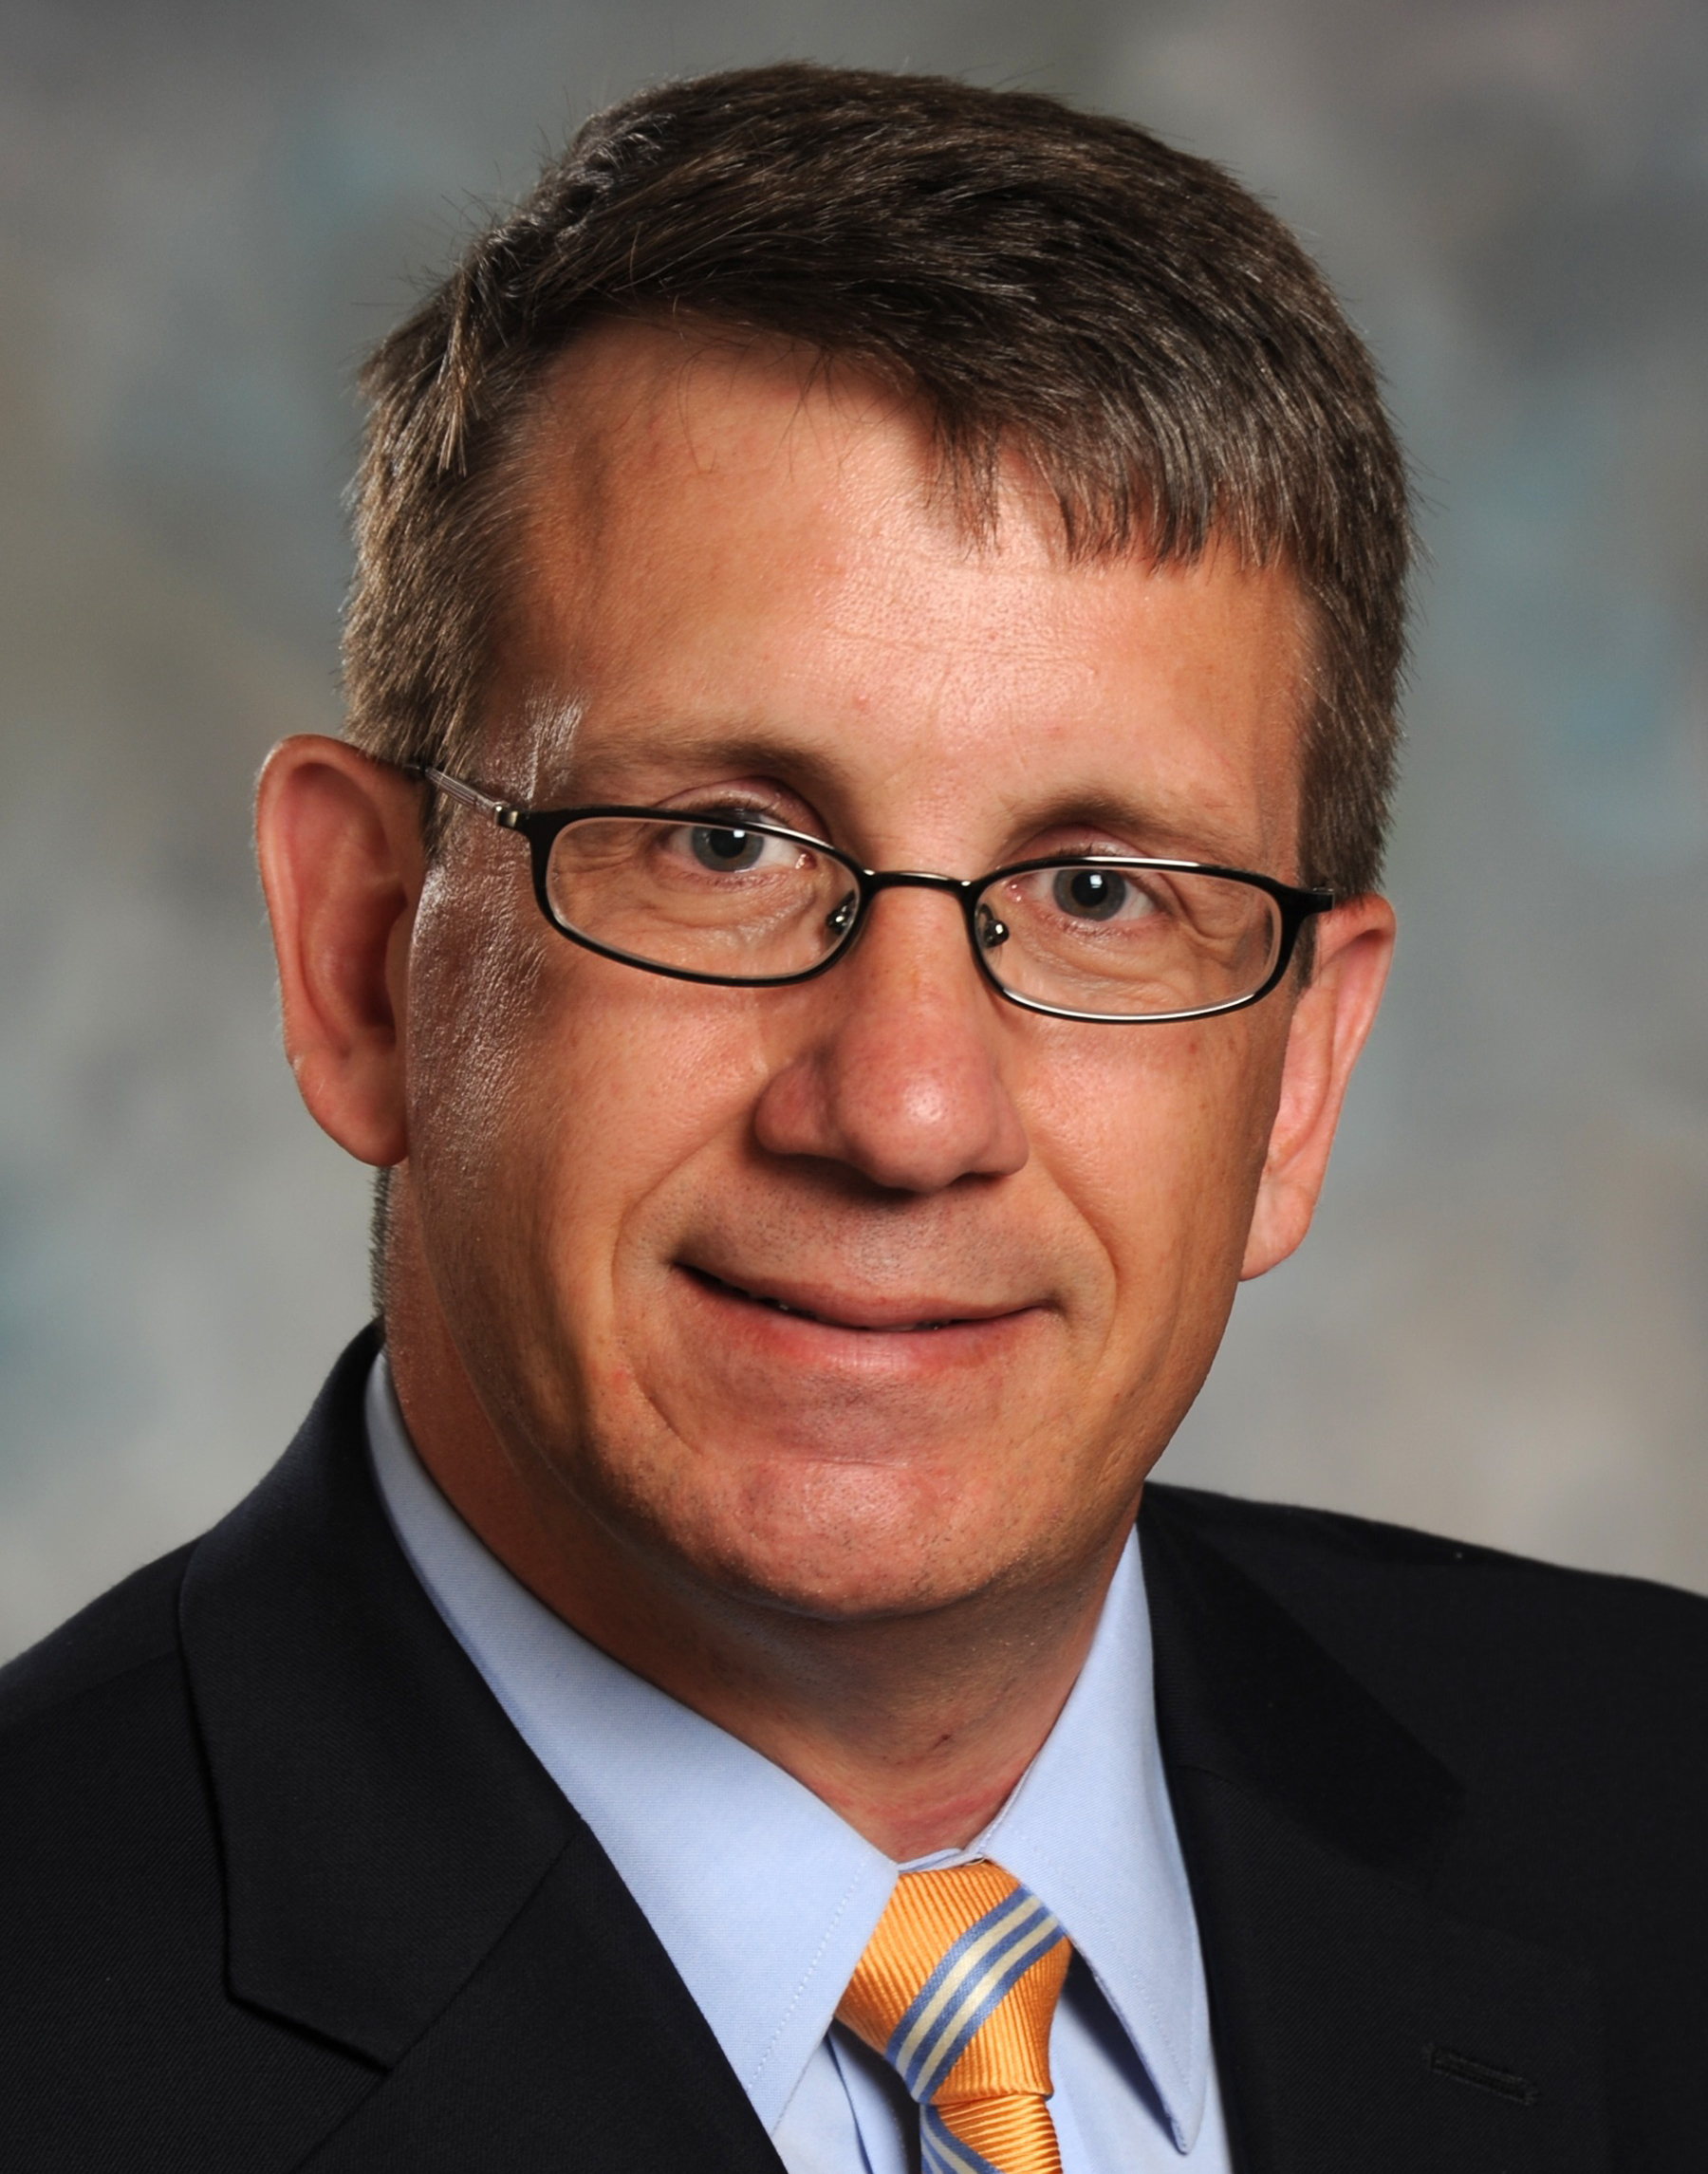 Greg Schuler in glasses on gray background